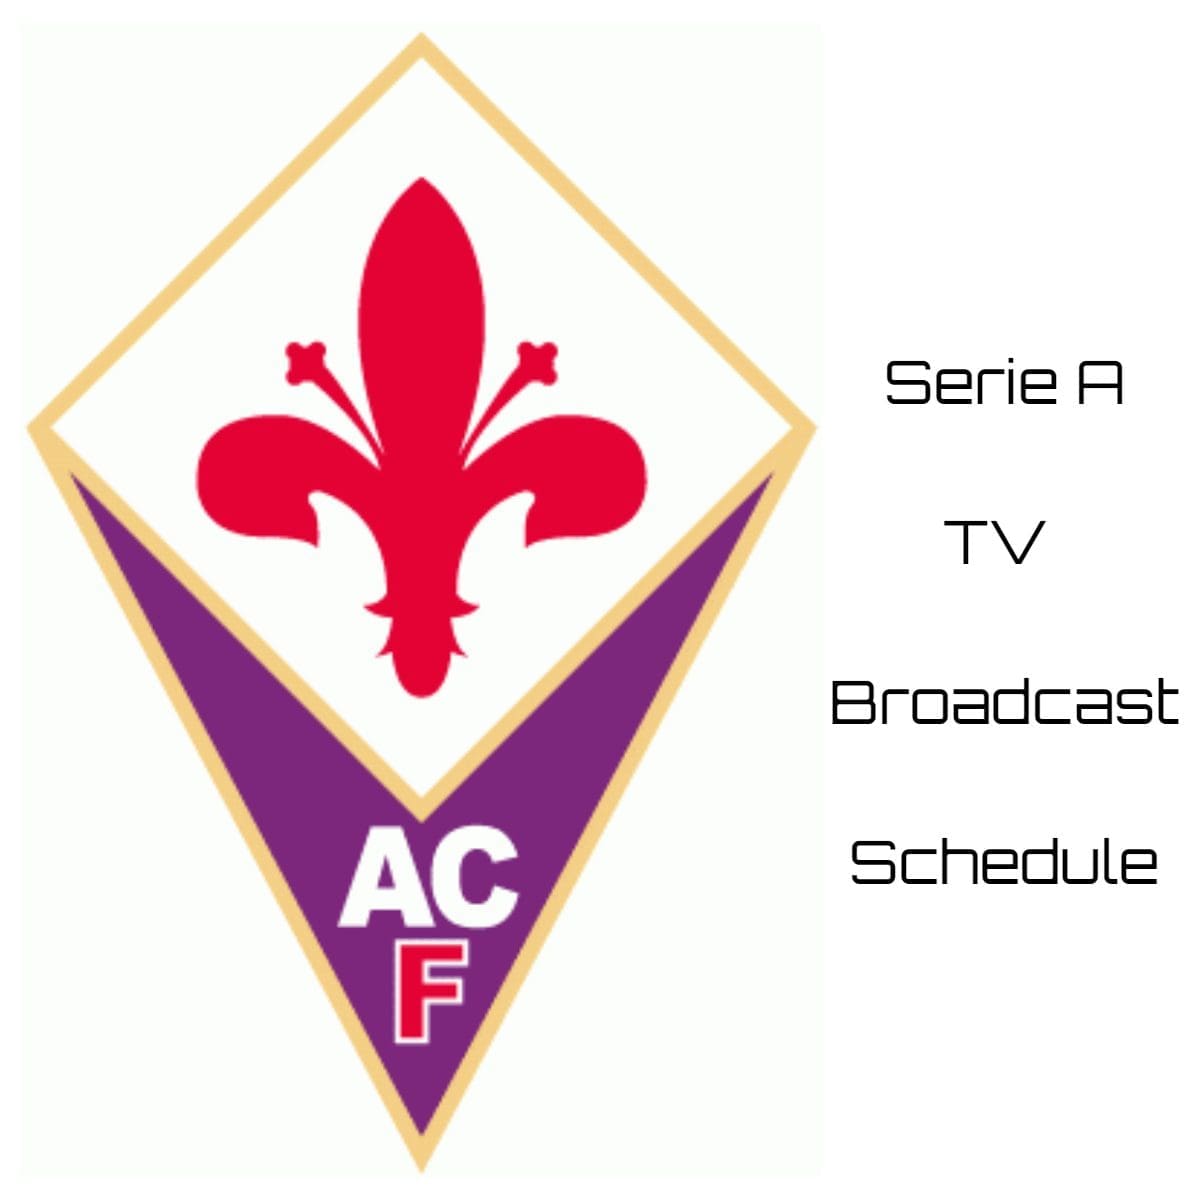 Fiorentina TV Broadcast Schedule